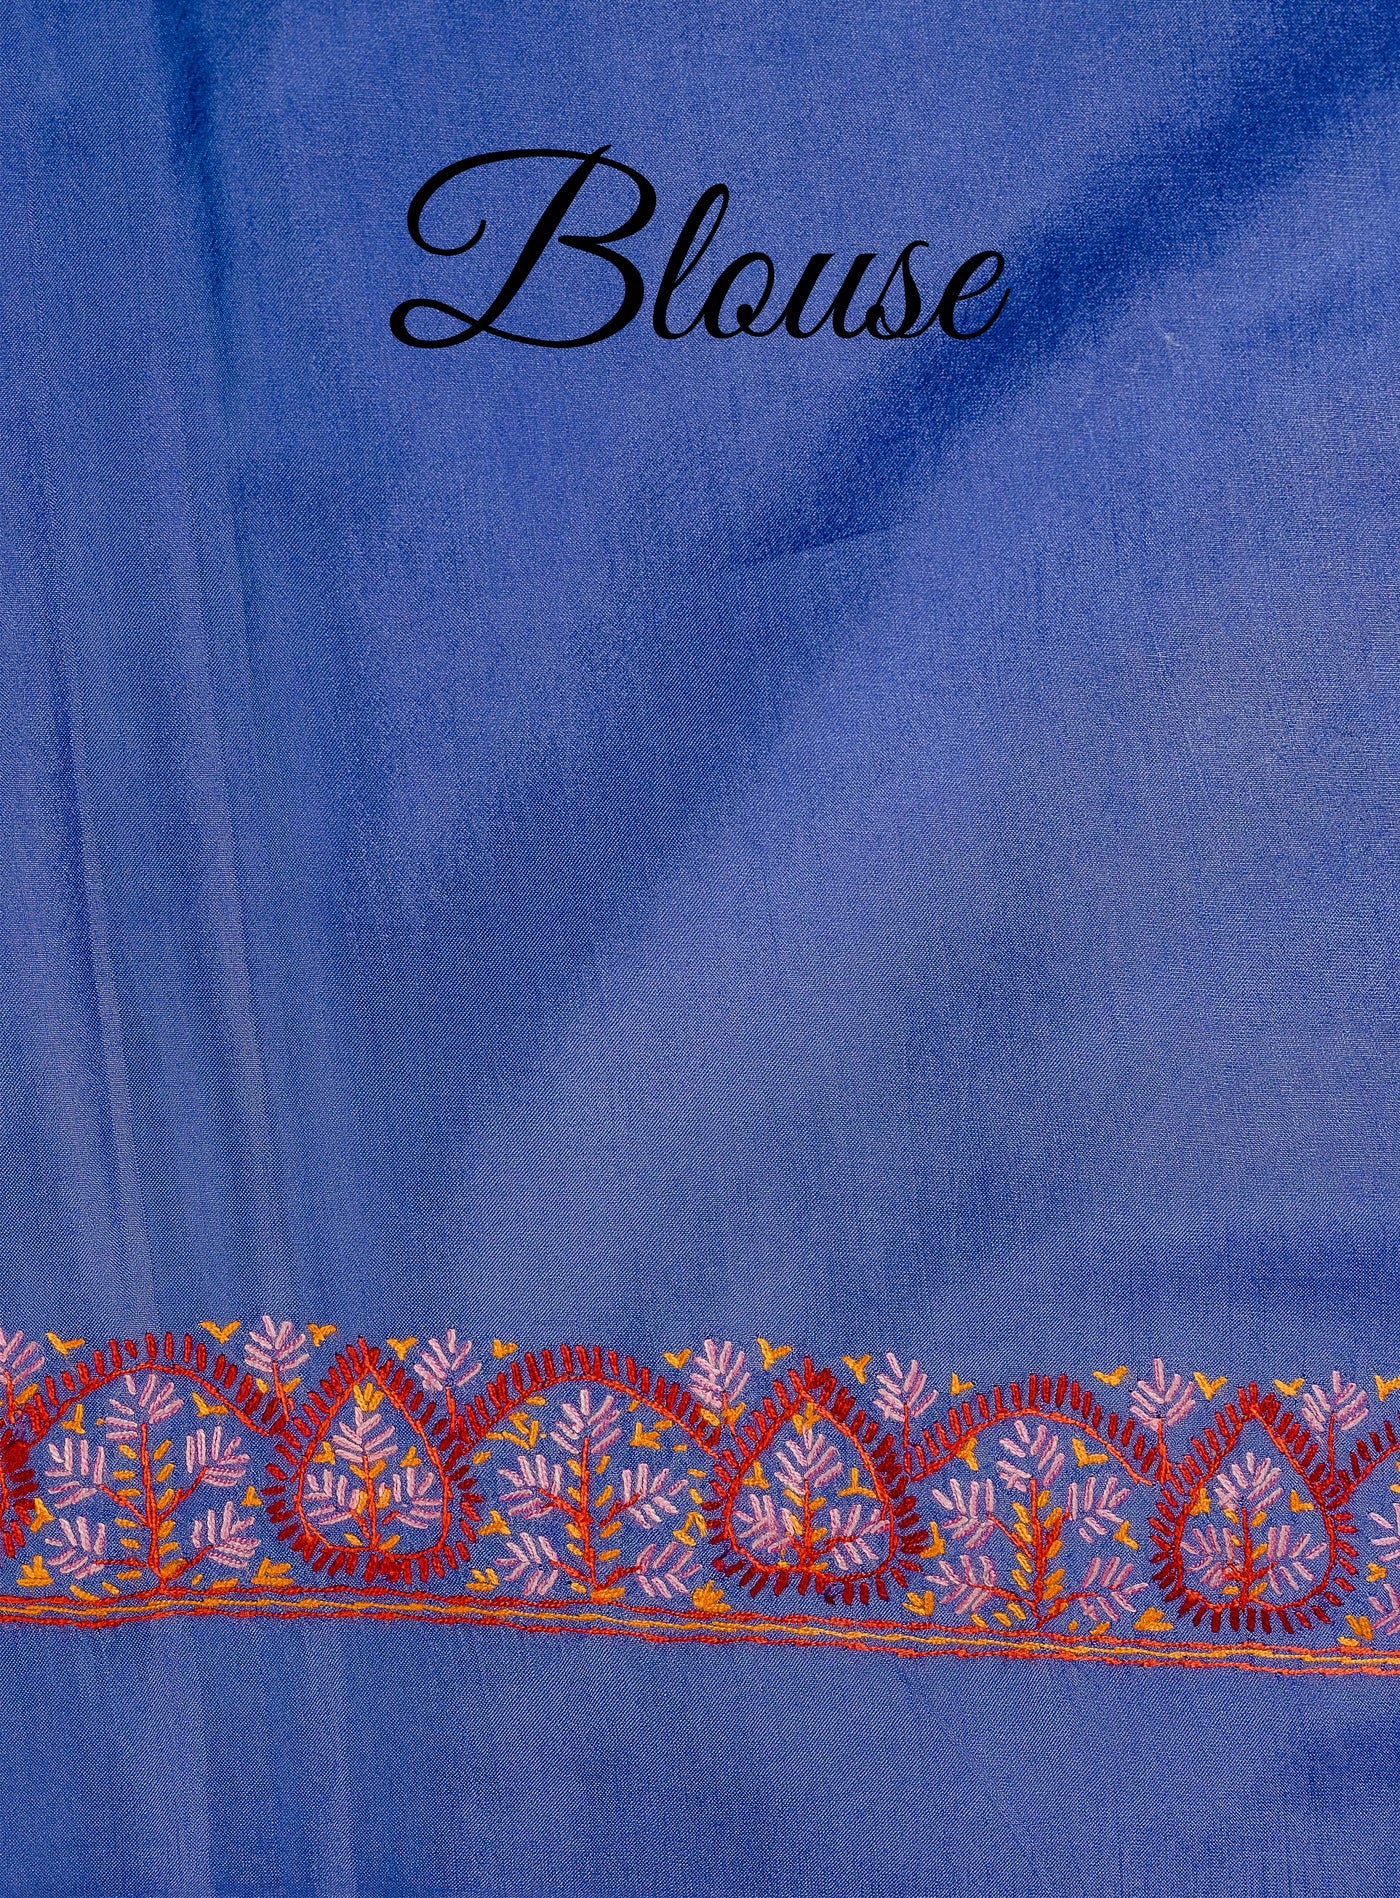 A Royal Affair: The Exquisite Kashmiri Hand-Embroidered Pure Silk Saree